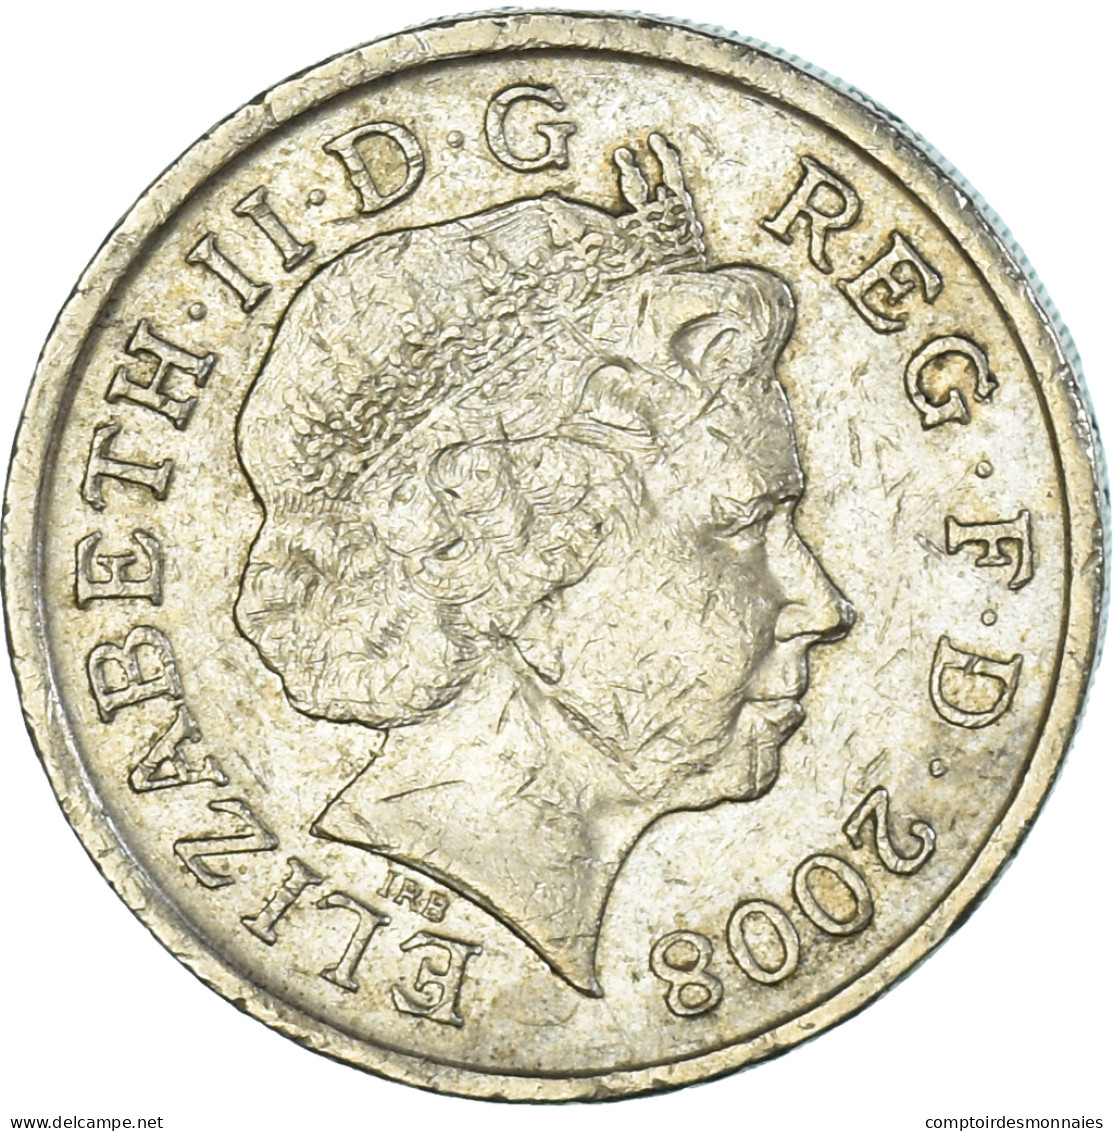 Monnaie, Grande-Bretagne, Pound, 2008 - 1 Pound